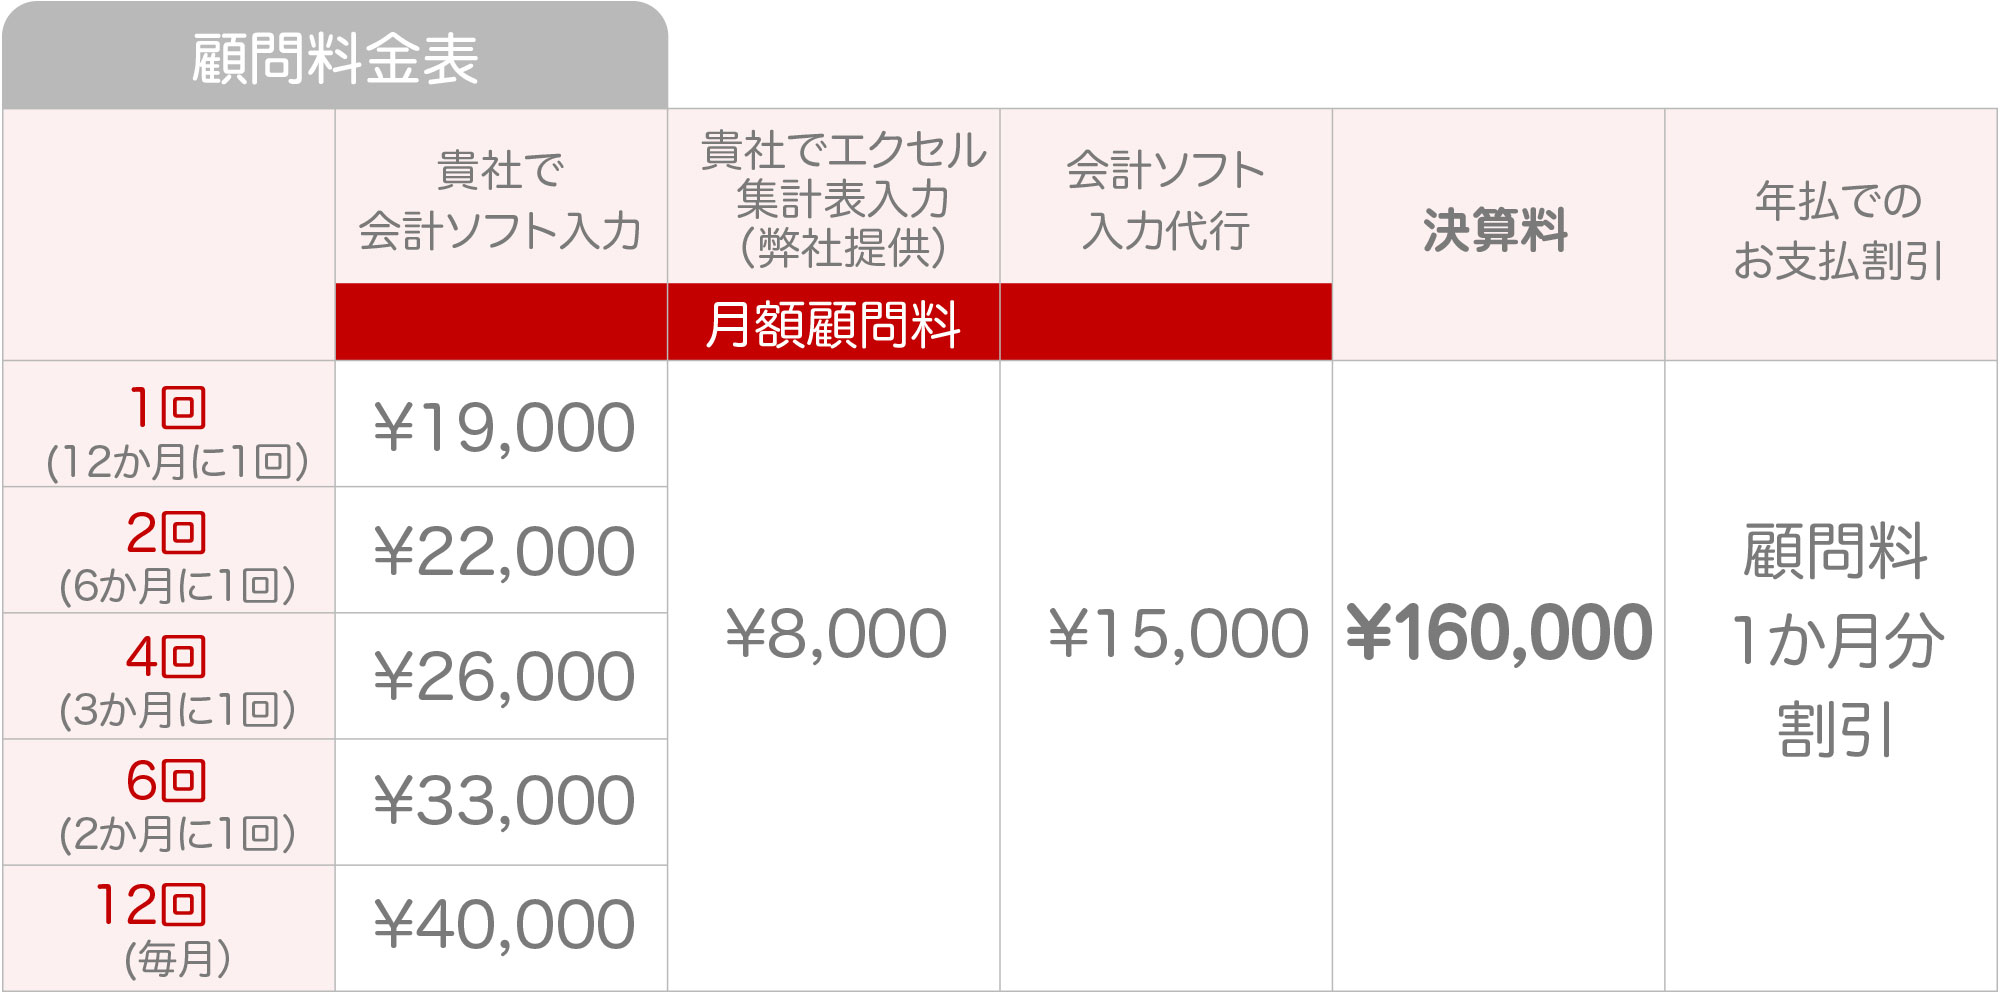 浅野会計事務所の金額・料金案内Eプラン顧問料金表